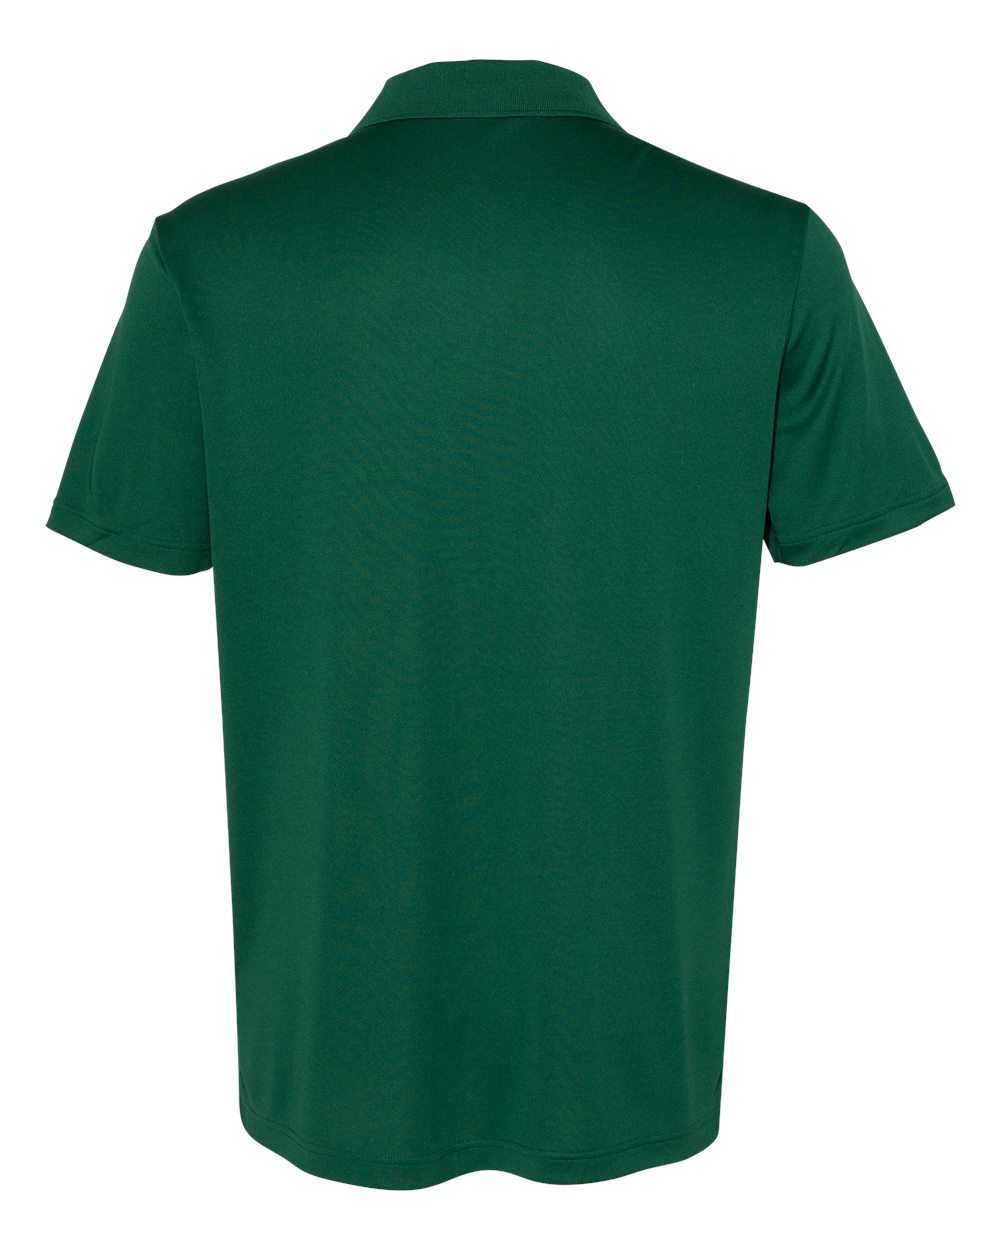 Adidas A230 Performance Sport Shirt - Collegiate Green - HIT a Double